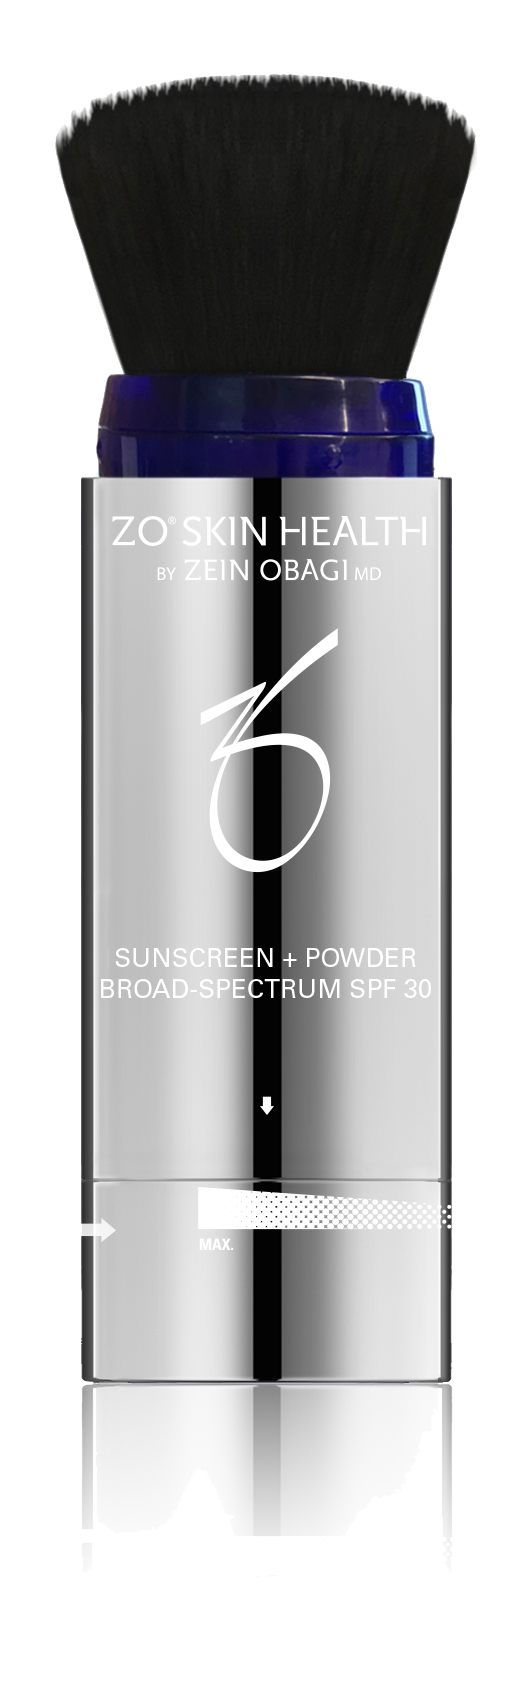 Sunscreen + Powder SPF 30